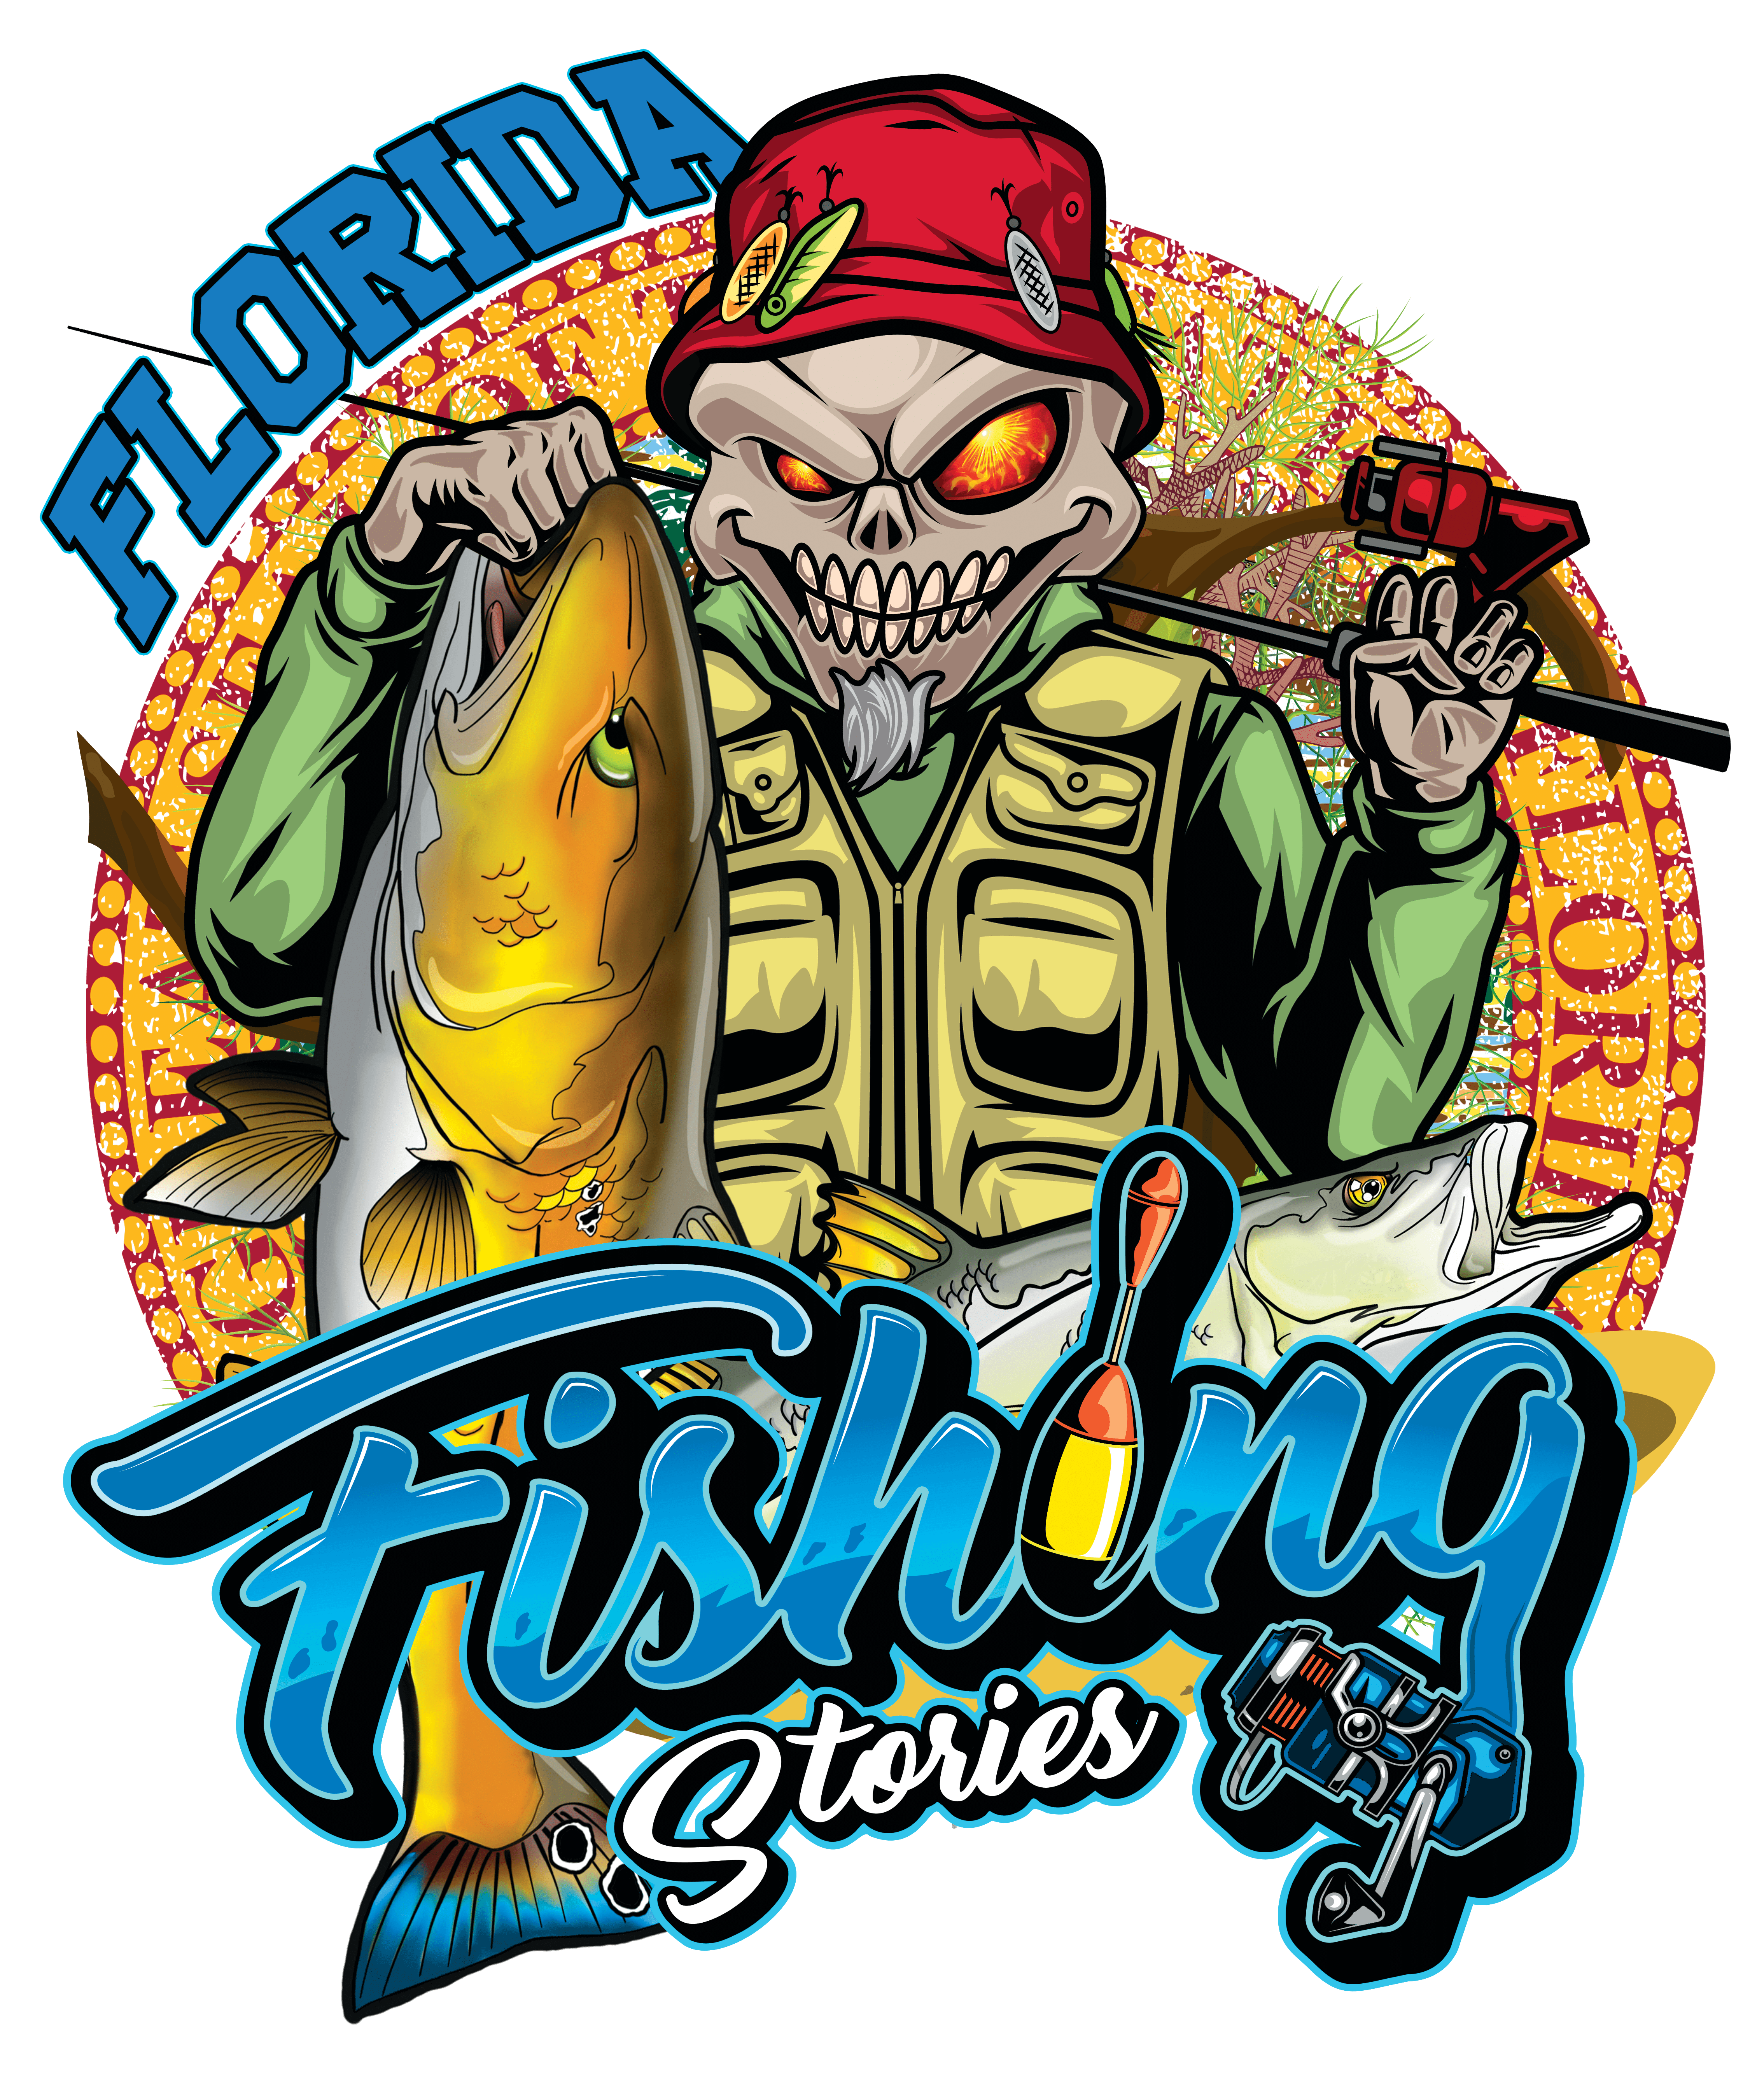 Fishing Themed Salt Devils - Florida Stories Long Sleeve Performance Shirt